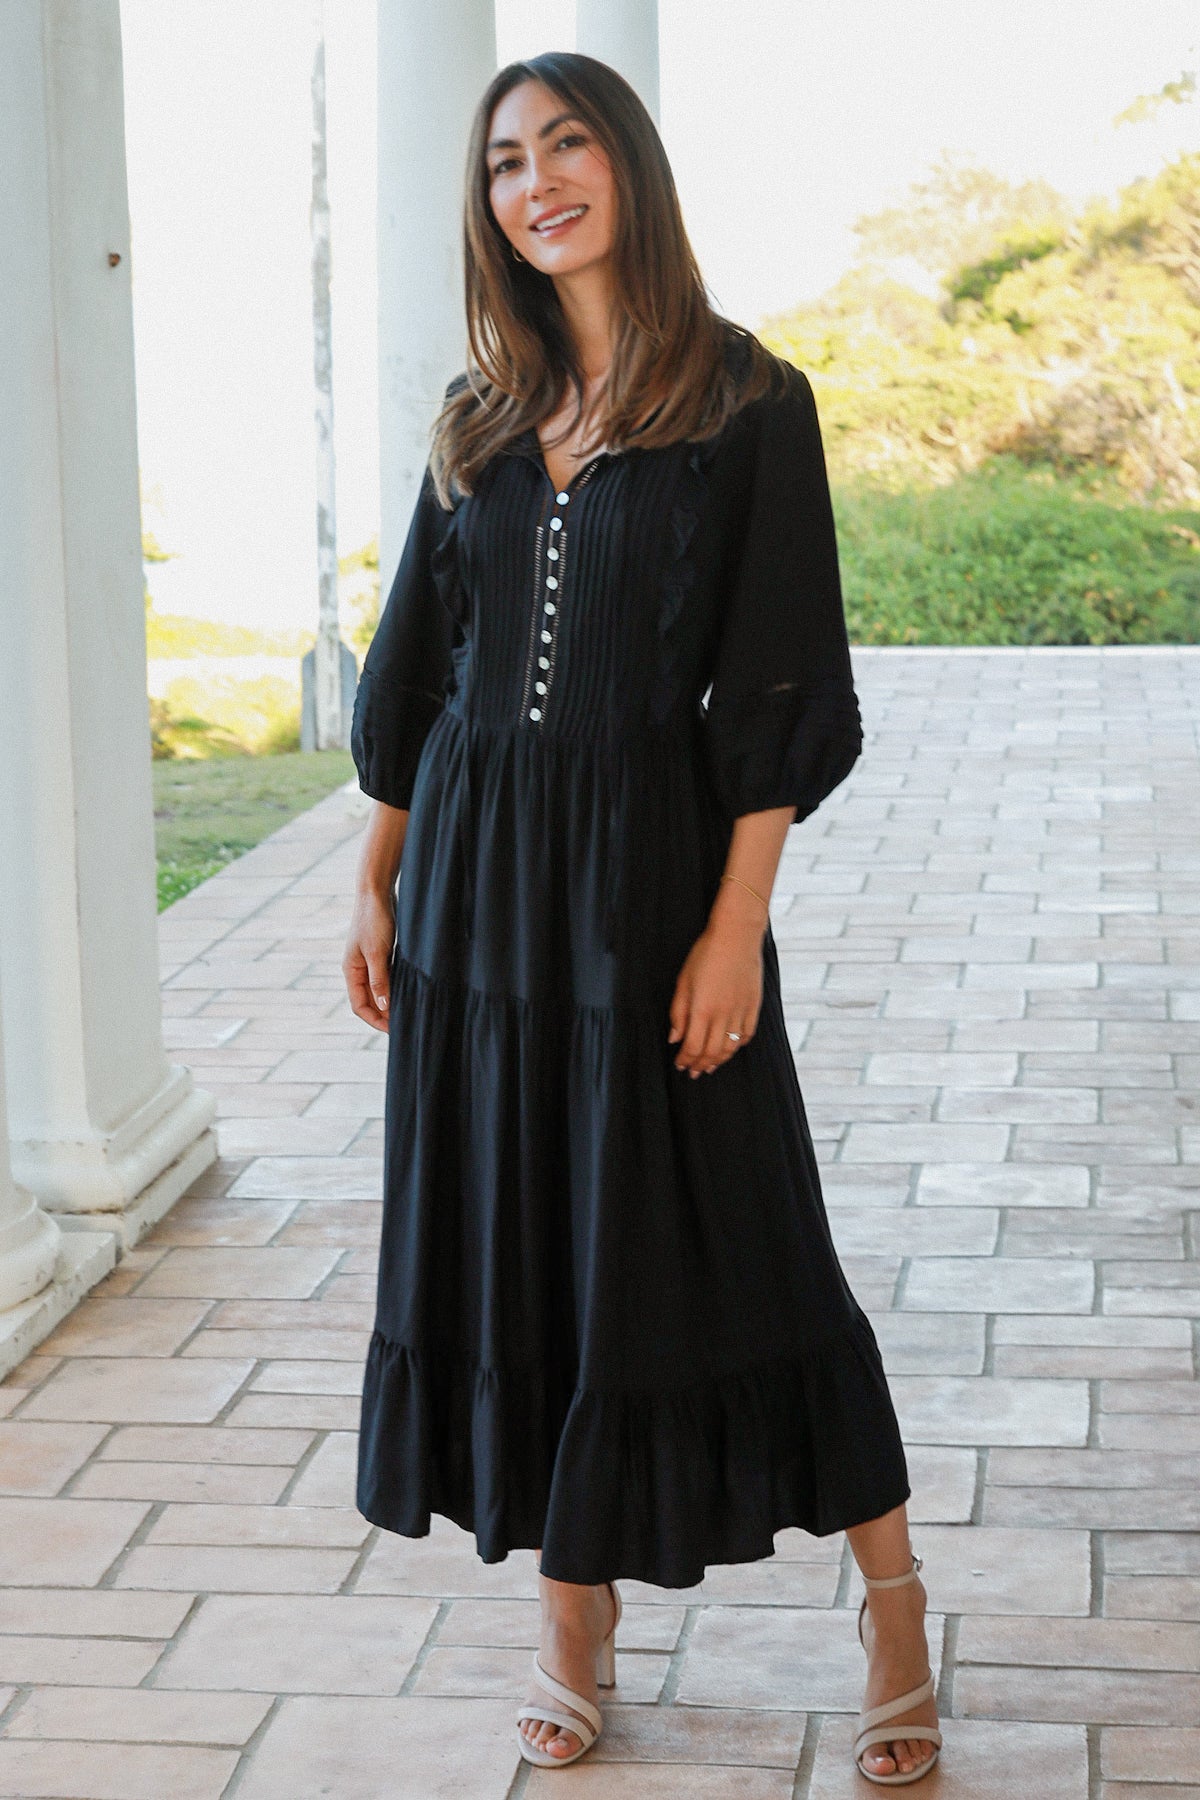 Mykah Black Midi Dress